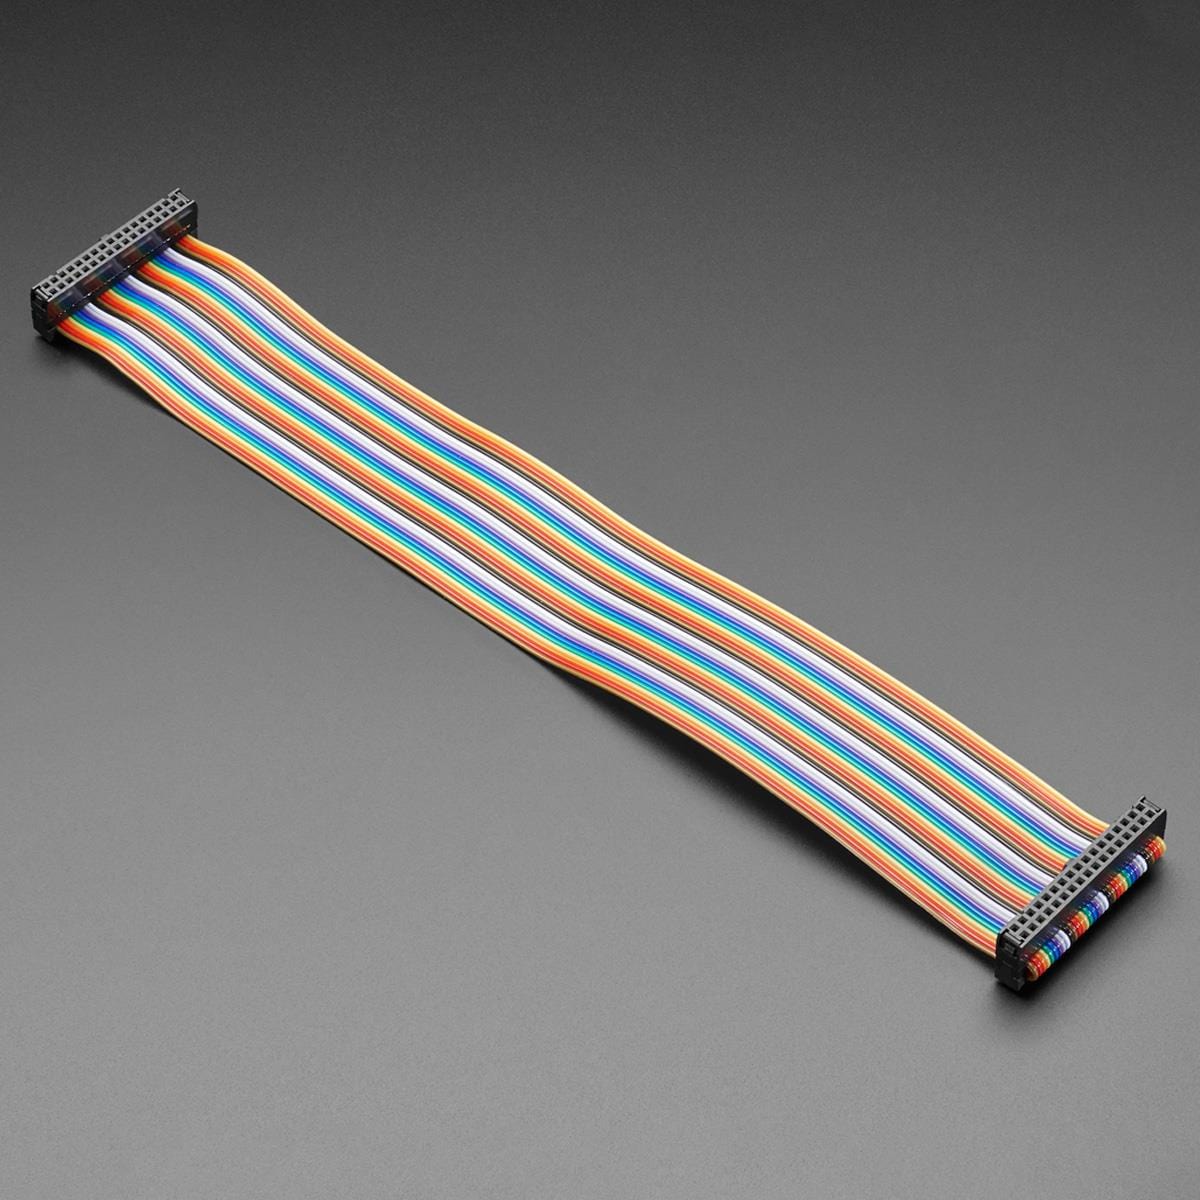 Rainbow 34-pin Dual Row IDC Floppy Ribbon Cable - 30cm long - The Pi Hut